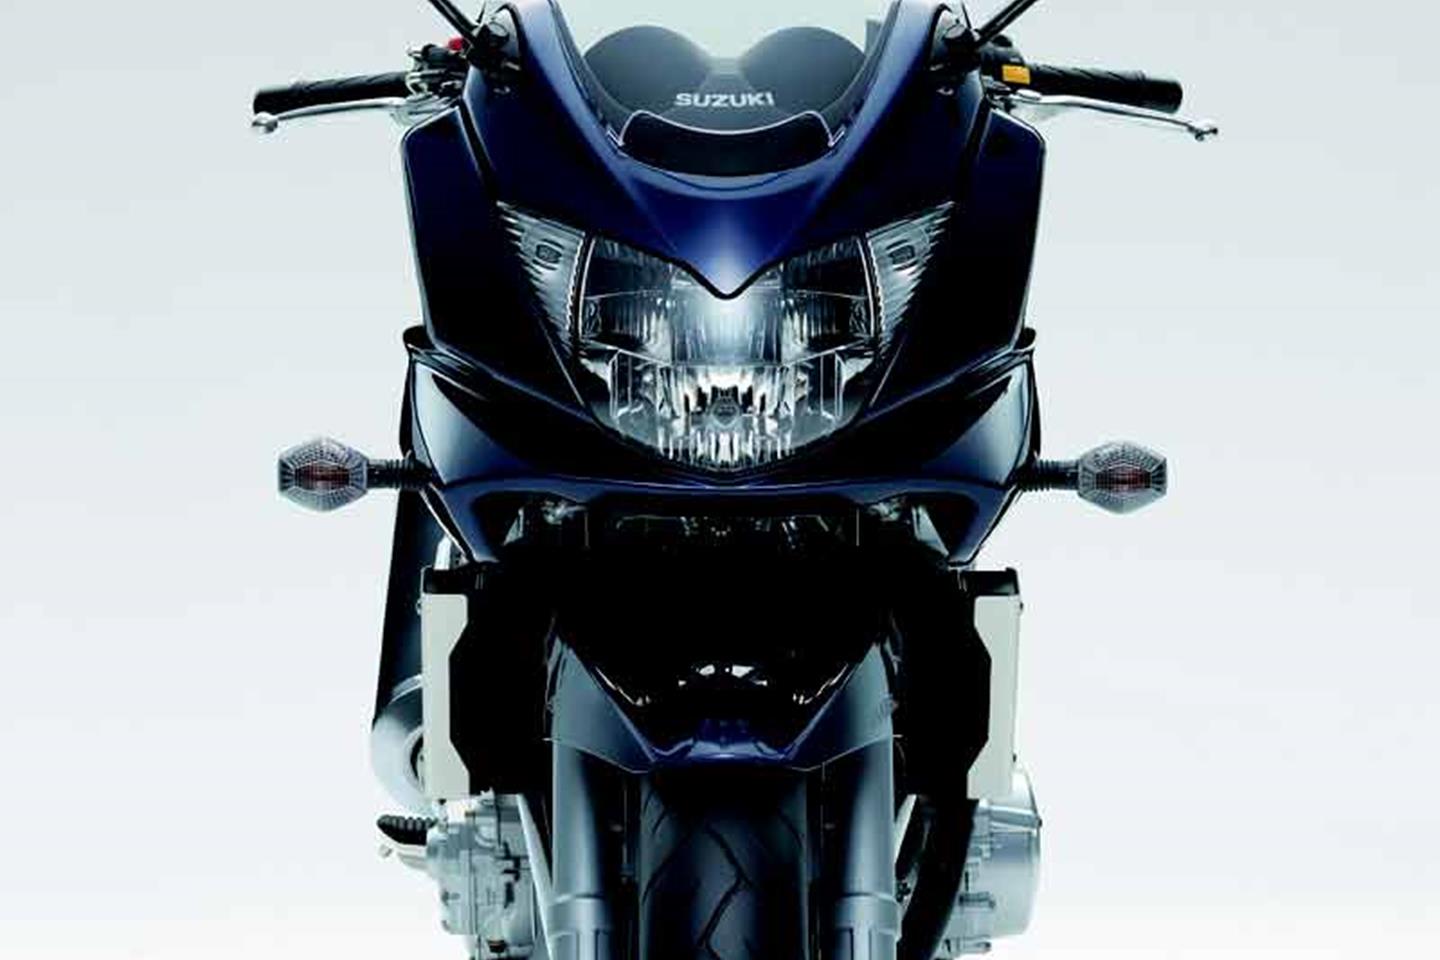 SUZUKI GSF1250 BANDIT (2007-2012) Motorcycle Review